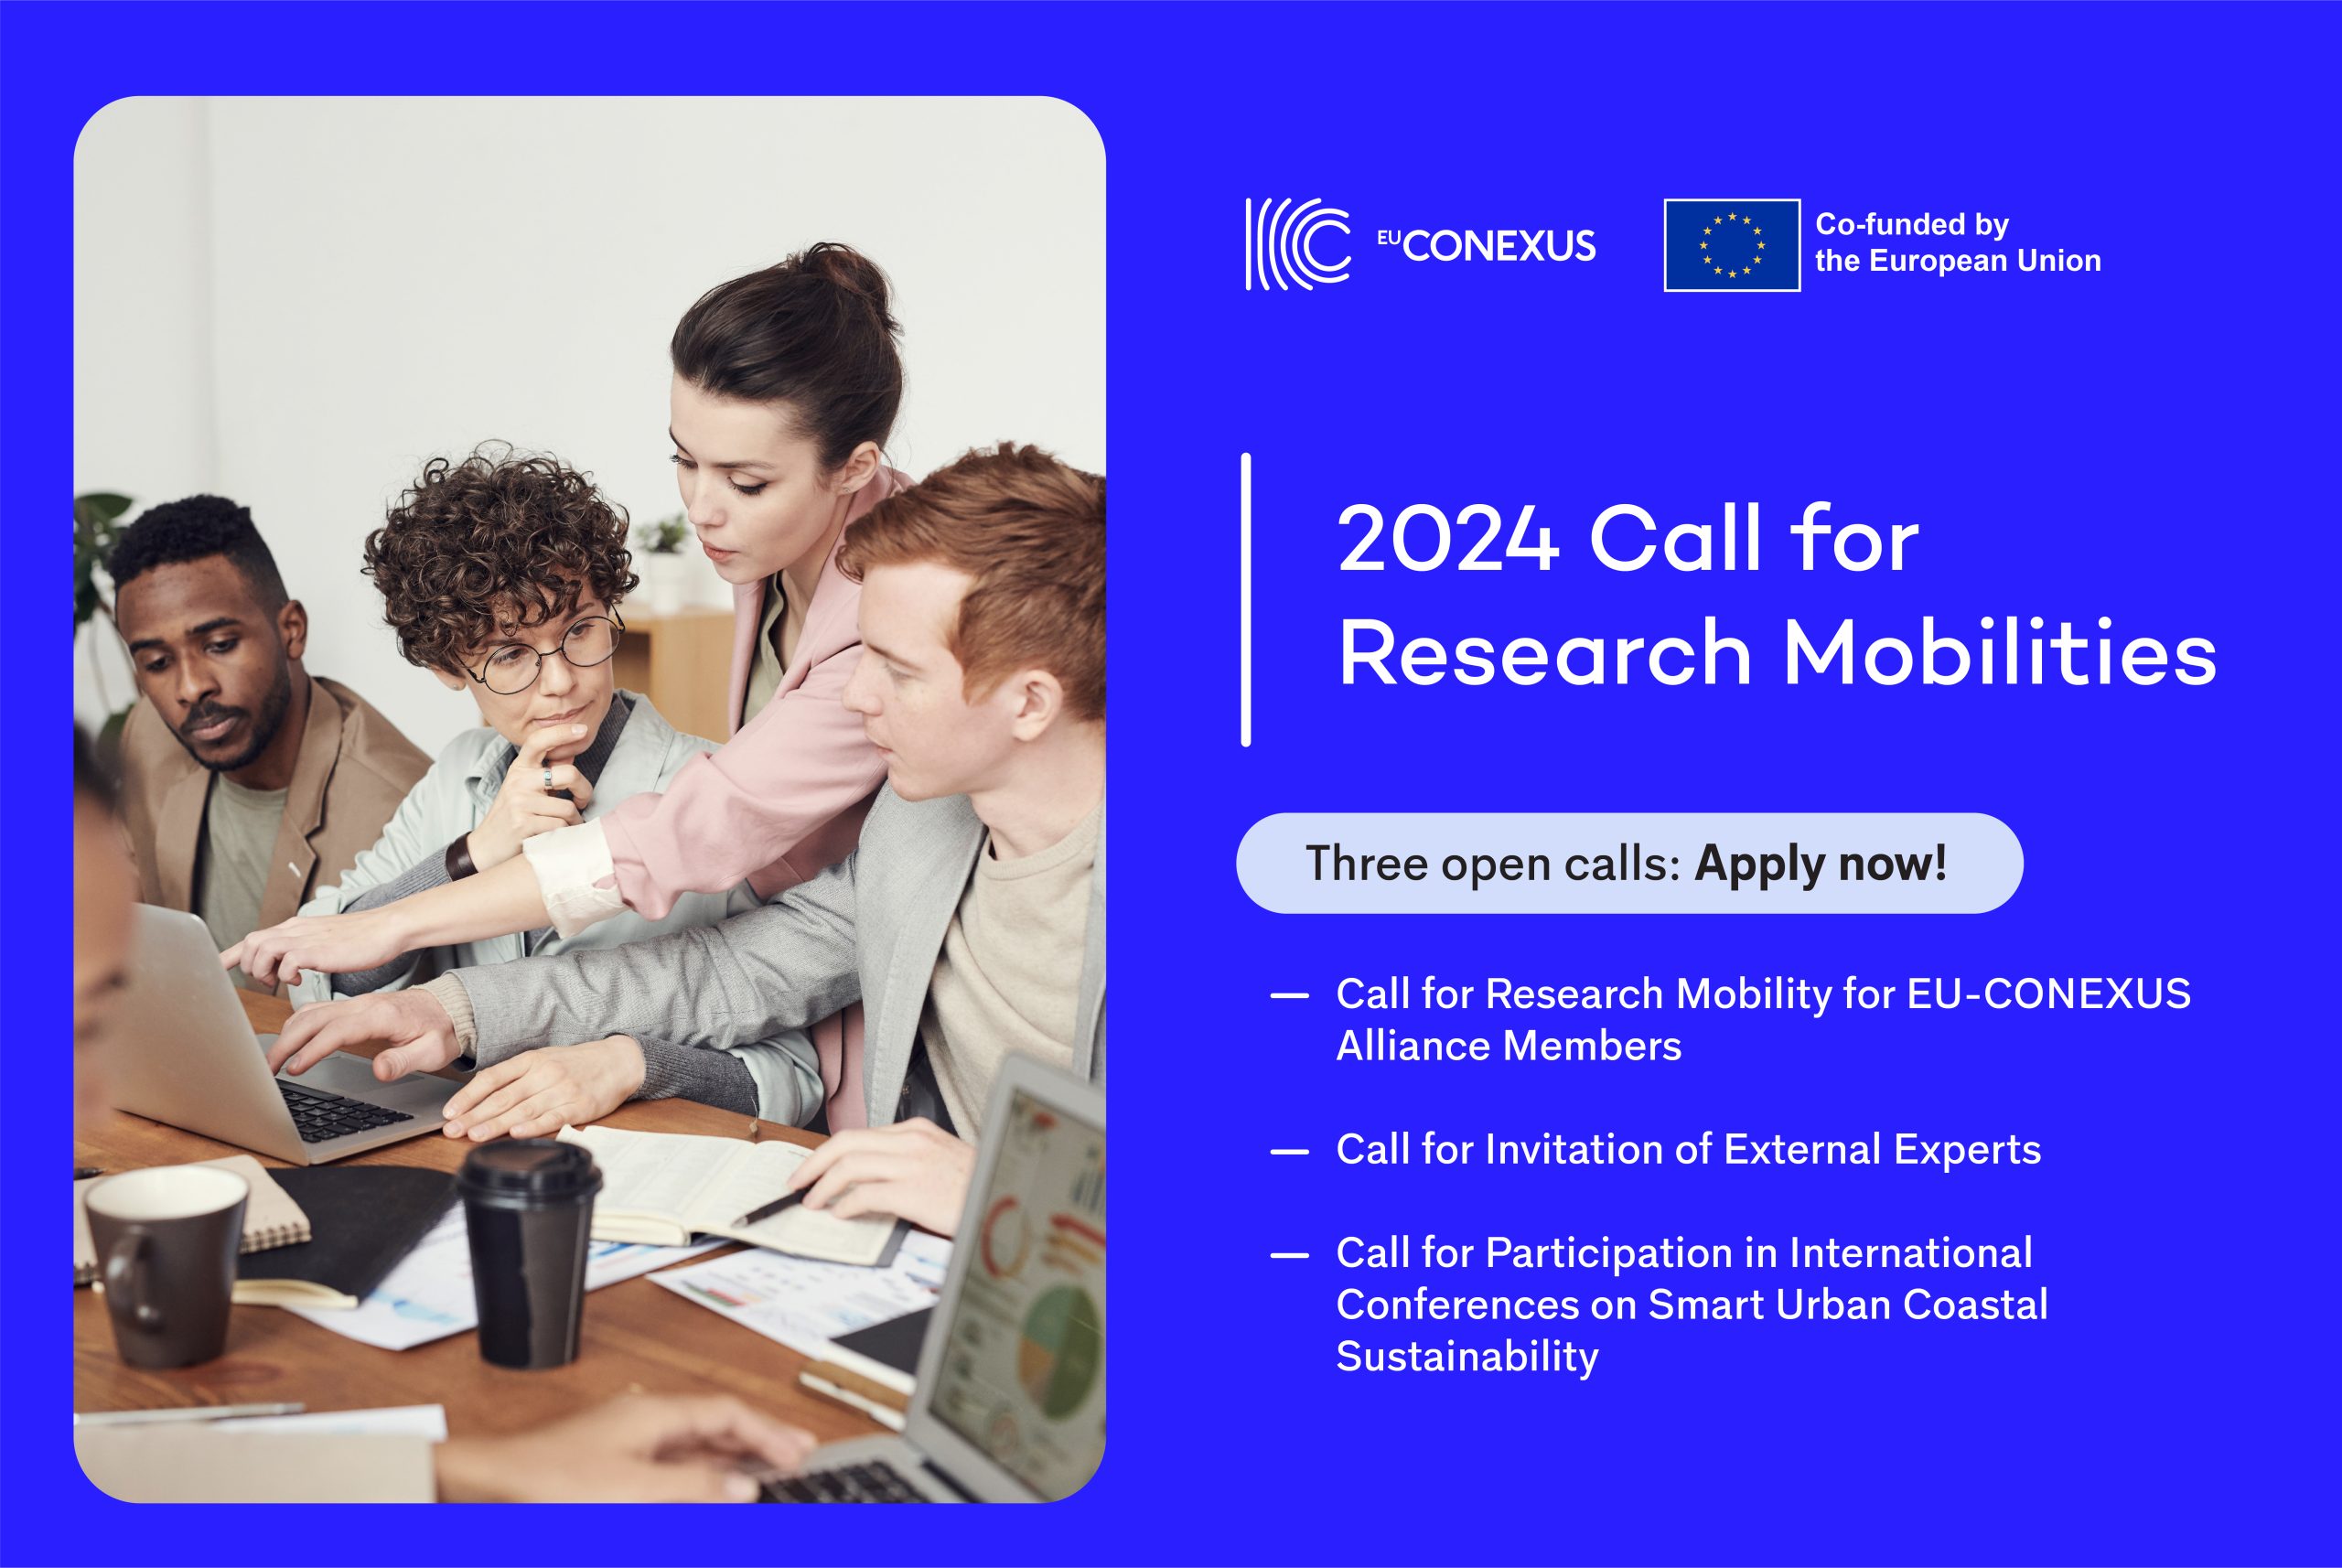 EU-CONEXUS launches 2024 Call for Research Mobilities